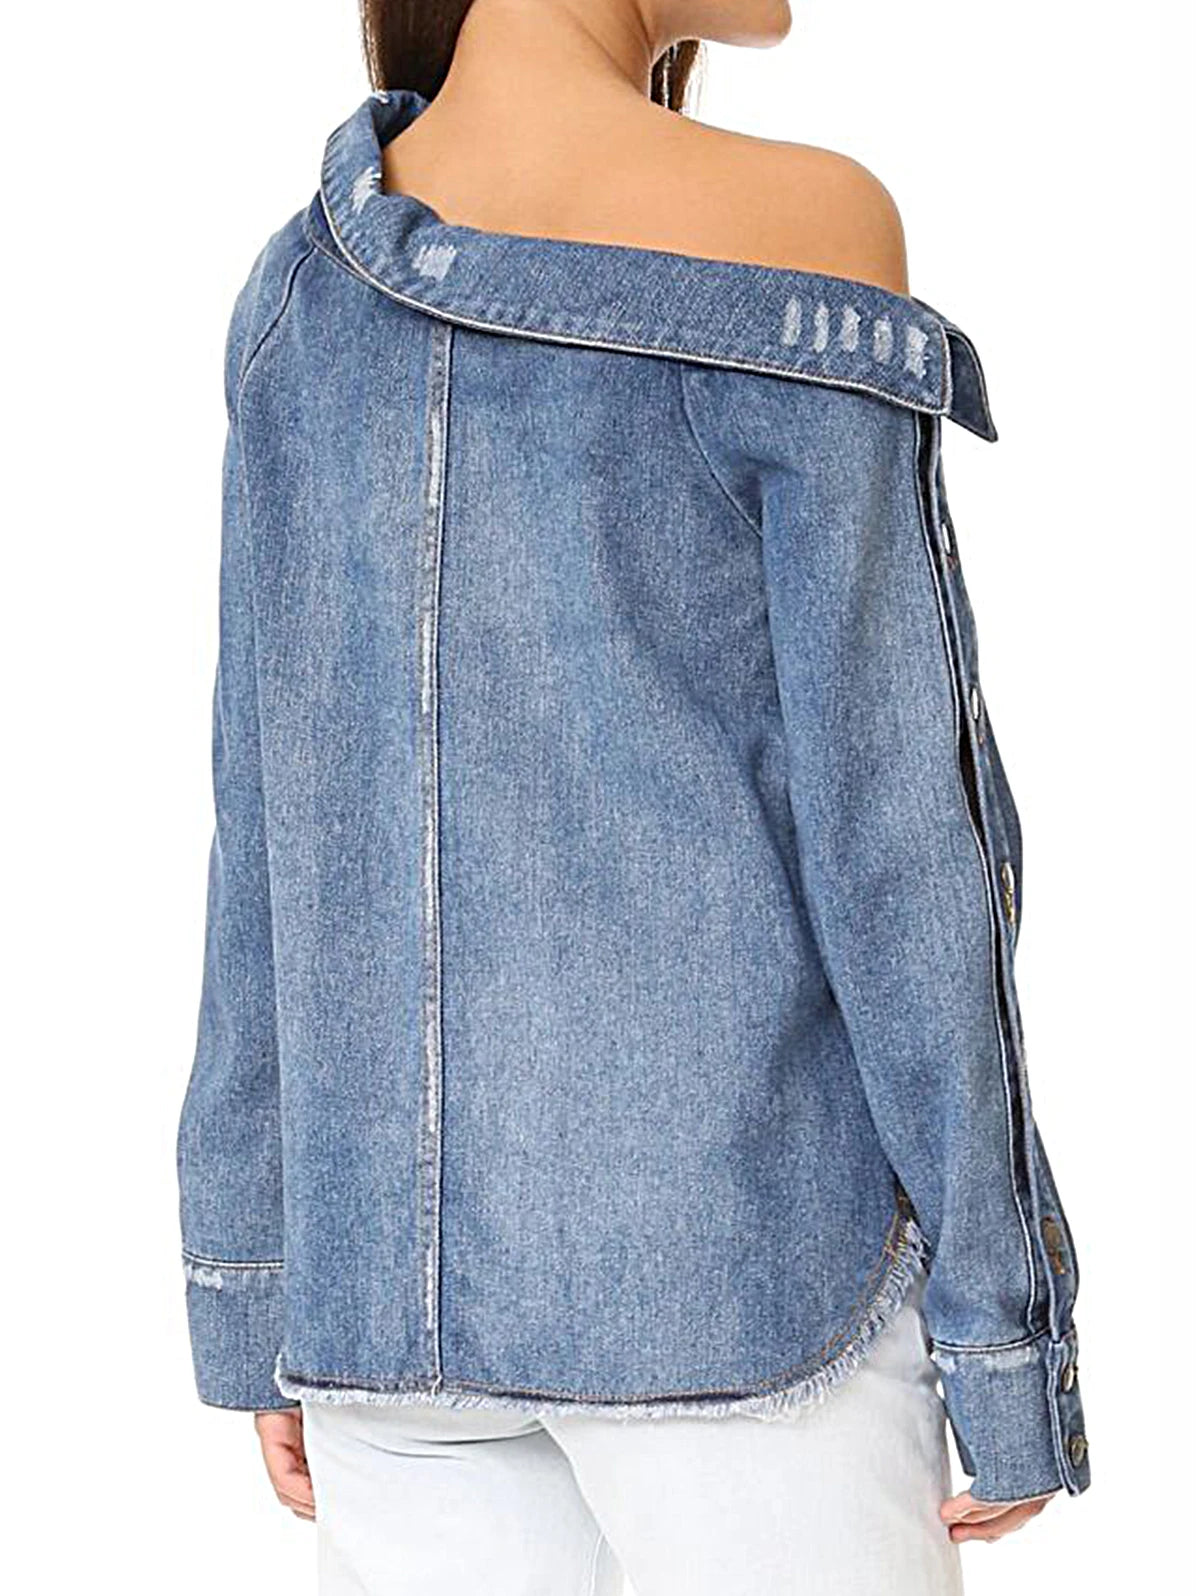 Women Fashion Single Shoulder Asymmetrical Denim Smock Blouse Femme Chic Pocket Buttons Shirt Chemise Blusas Tops voguable